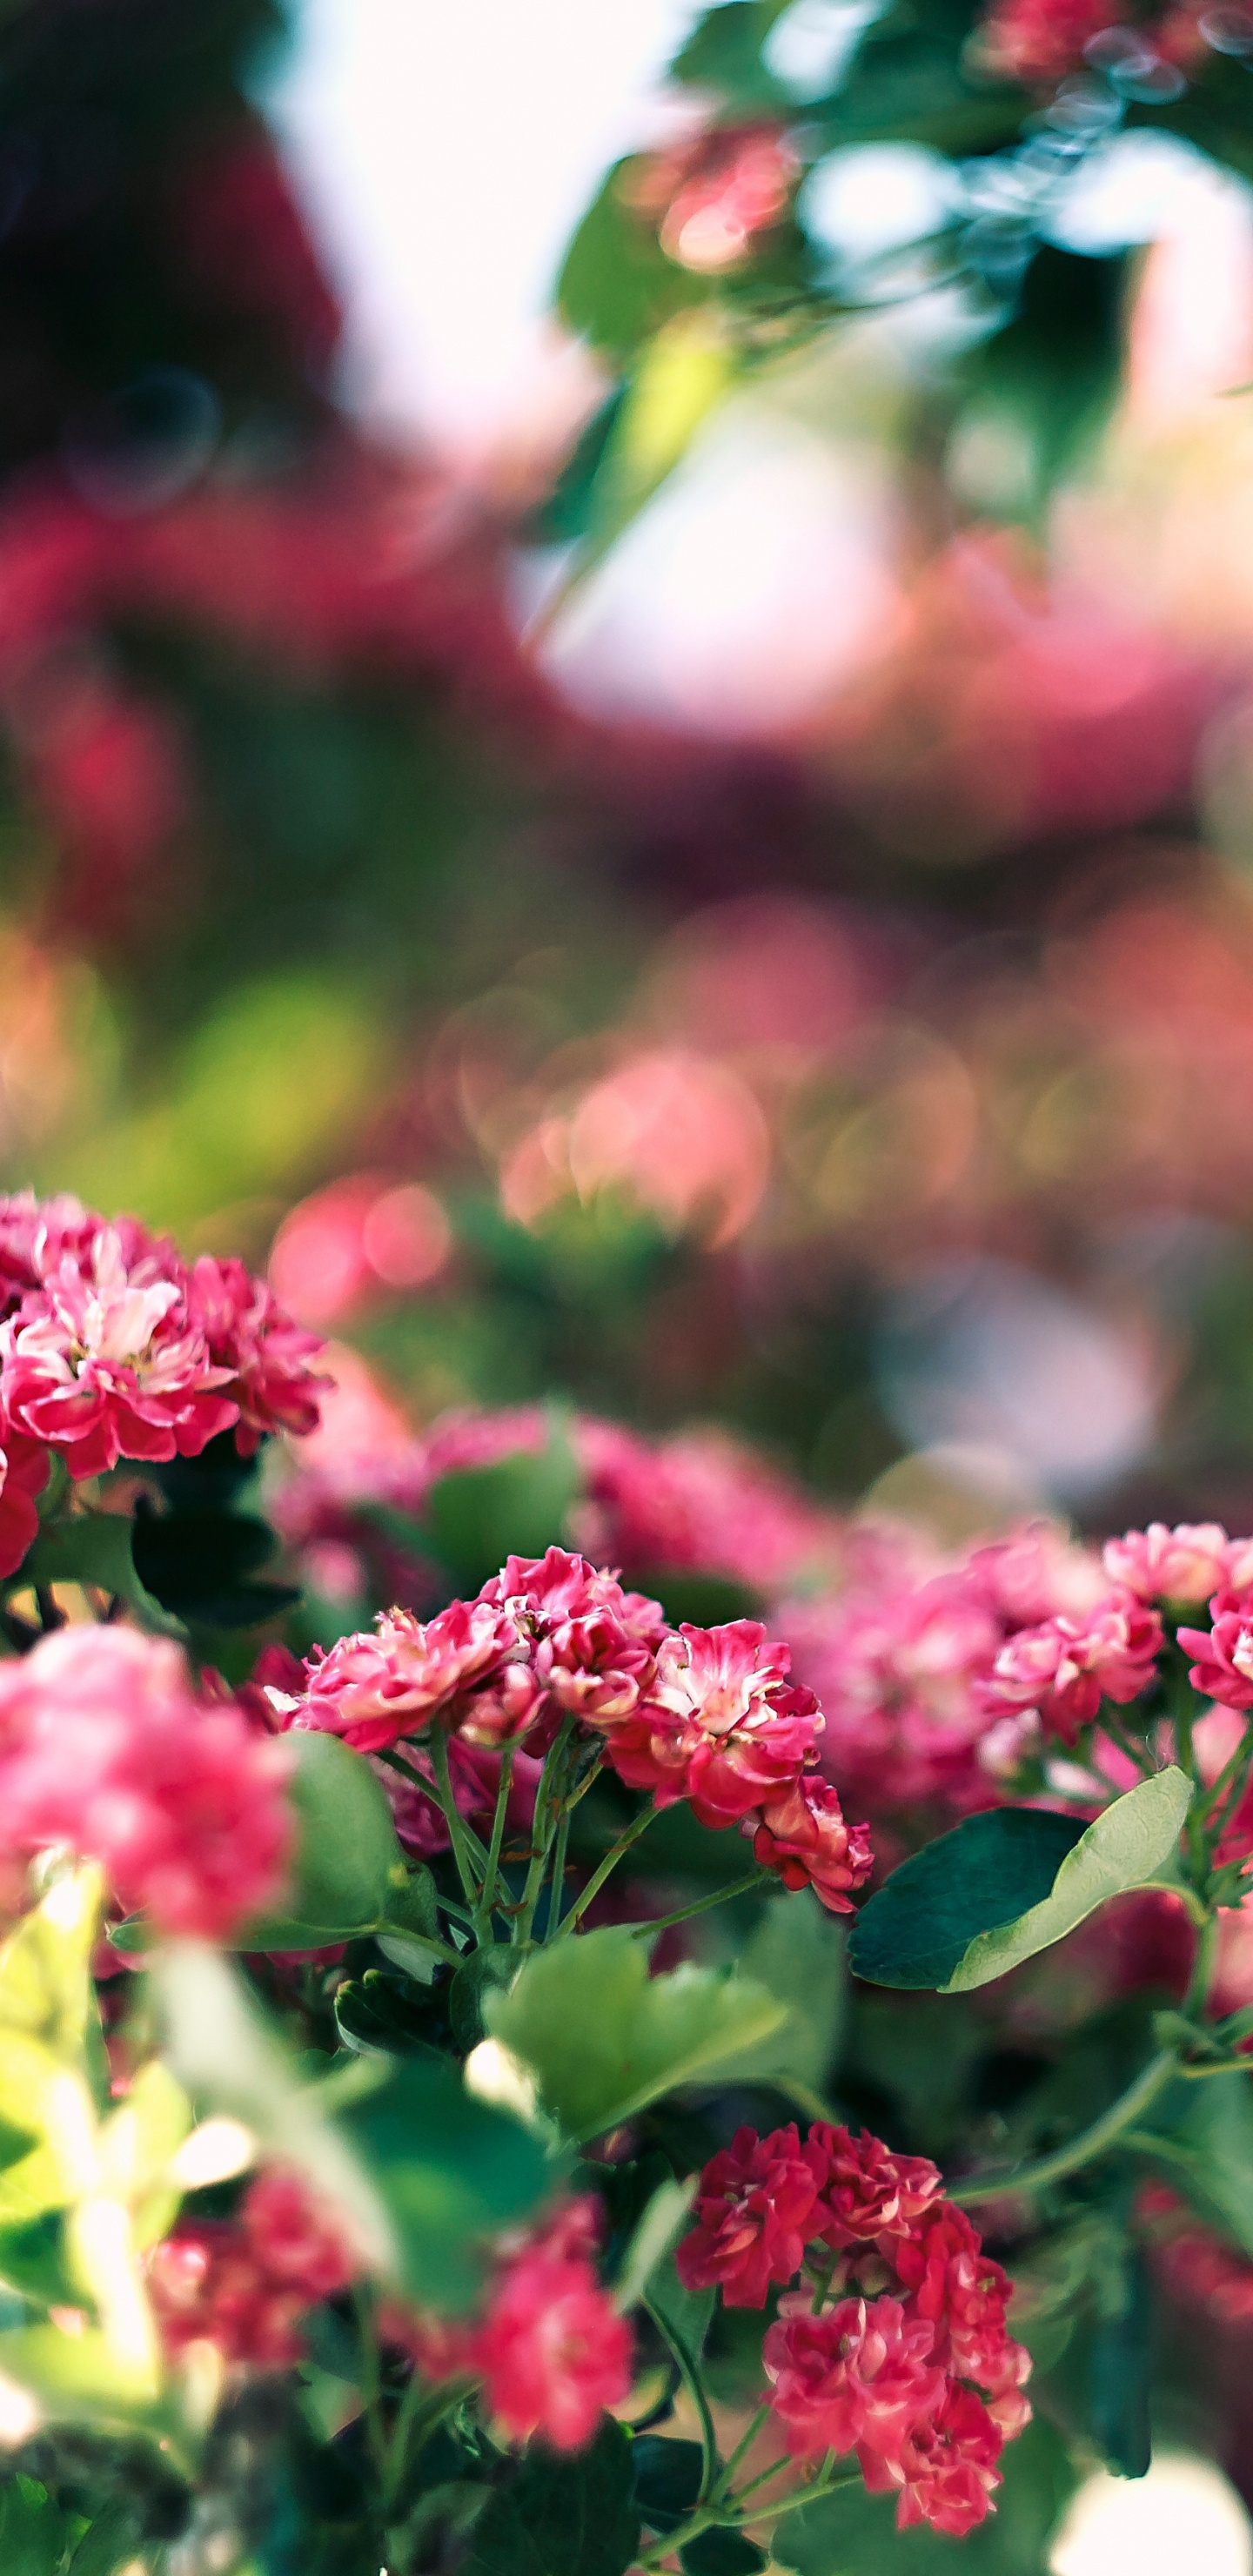 Pink and White Flowers in Tilt Shift Lens. Wallpaper in 1440x2960 Resolution